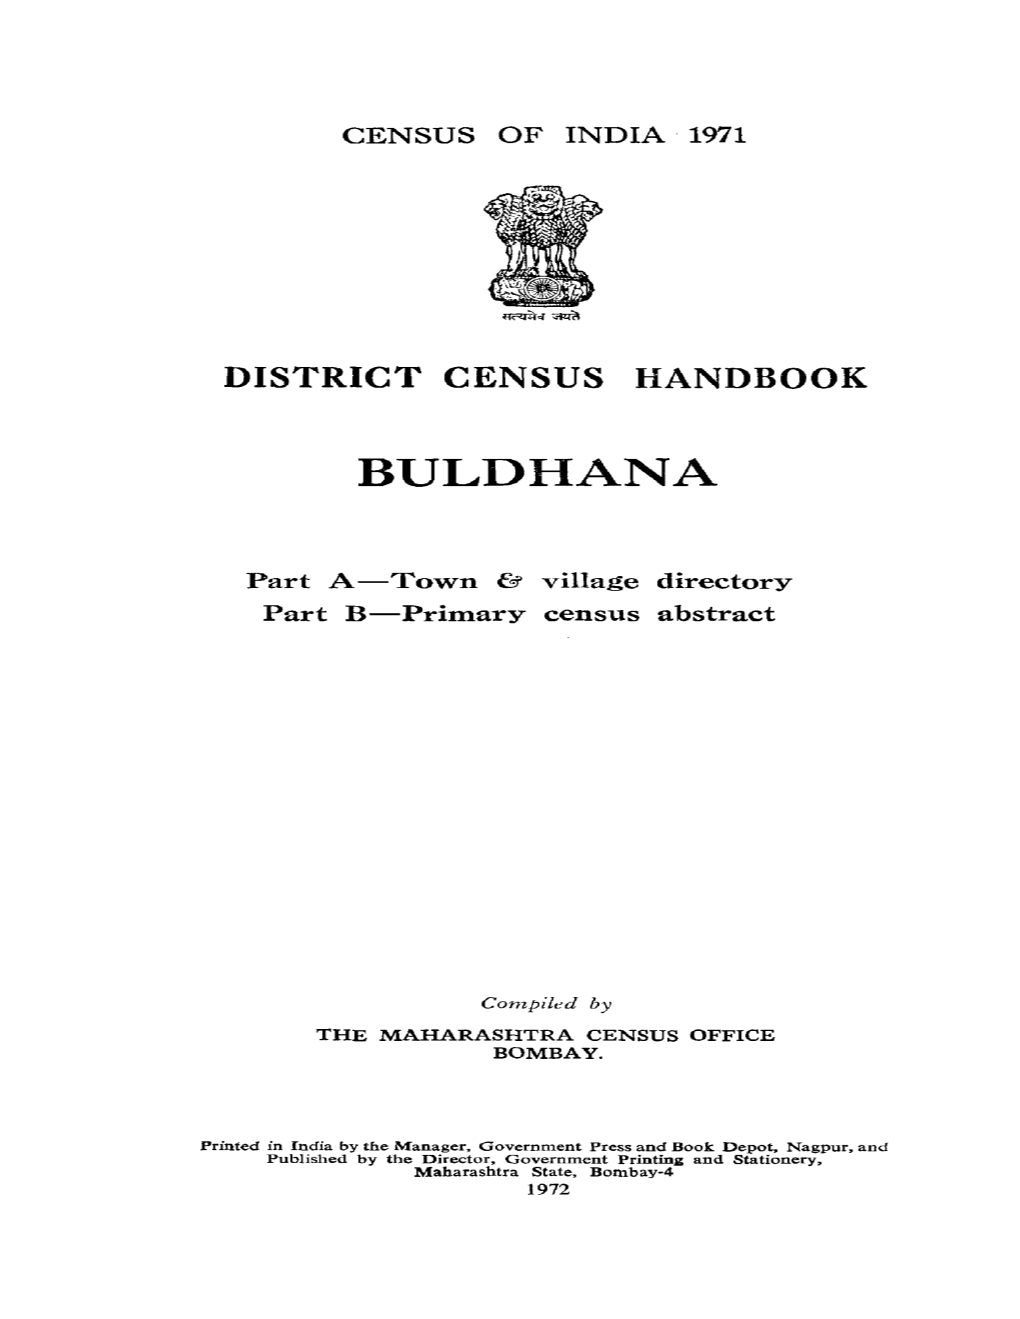 District Census Handbook, Buldhana, Part